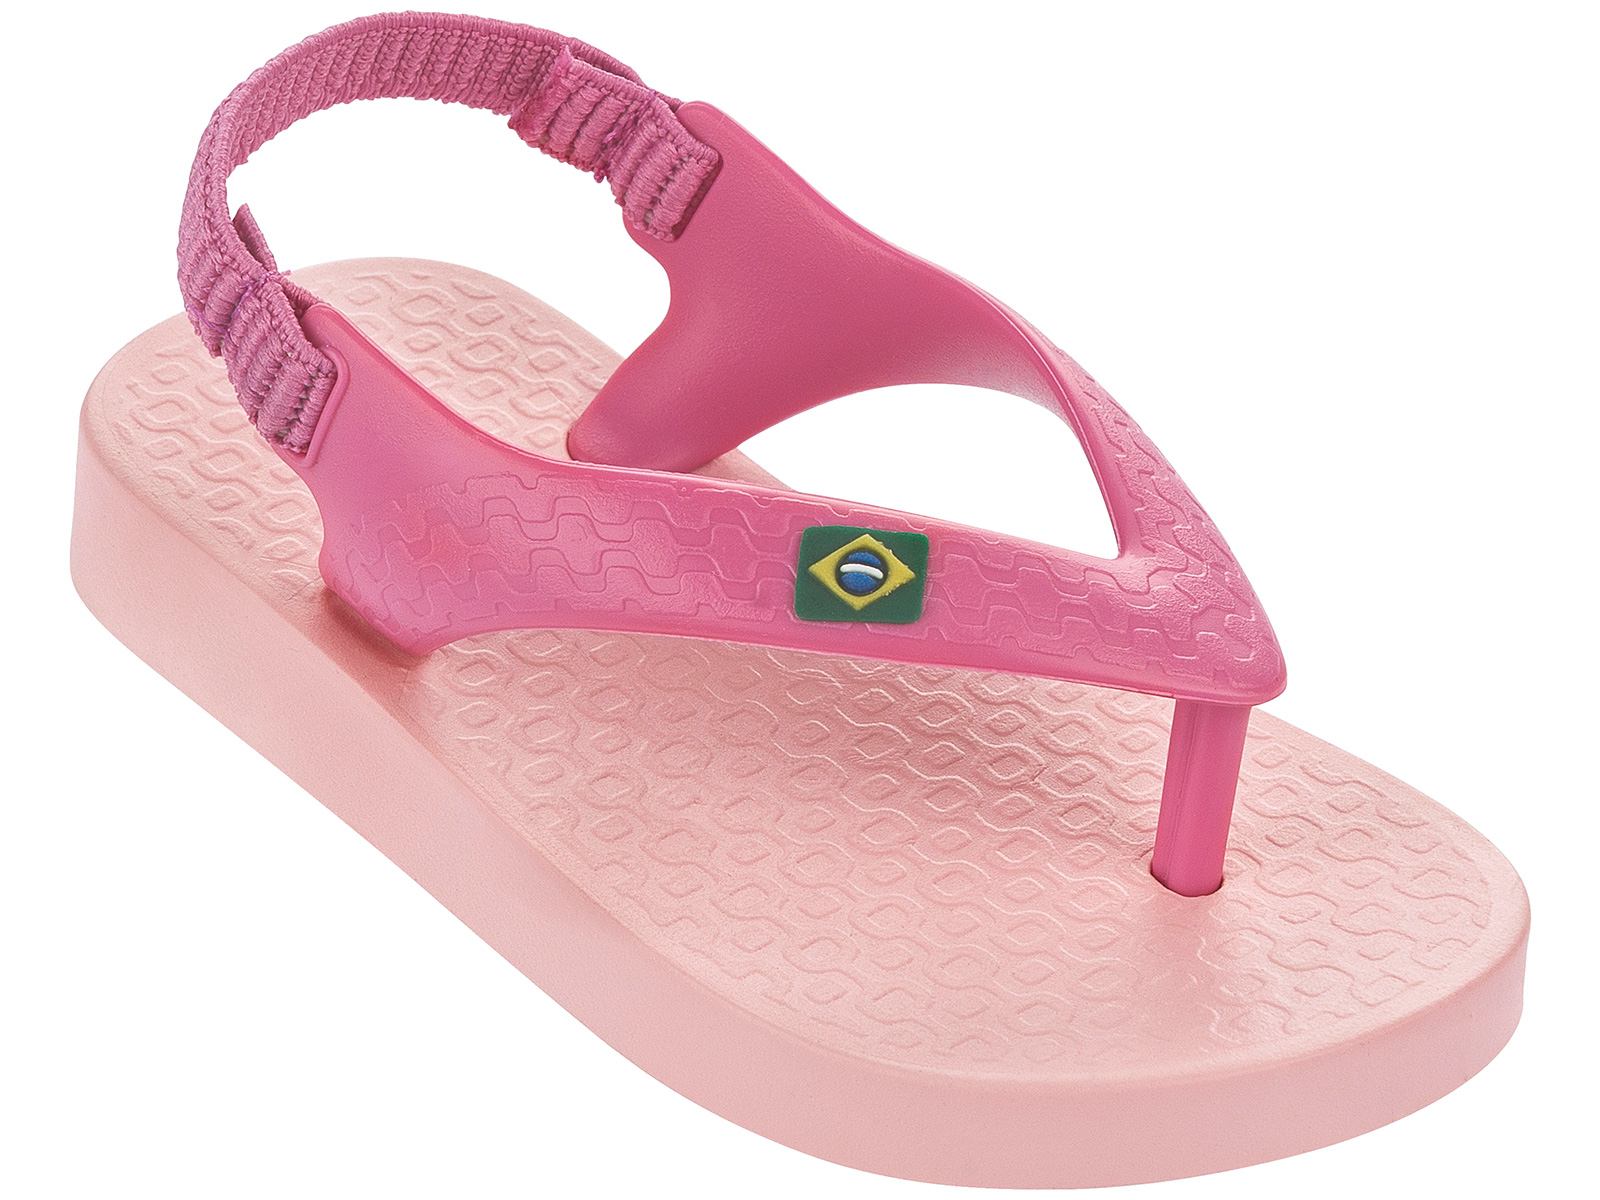 Ipanema Pink Flip Flops - Ipanema Classic Brazil Baby Pink